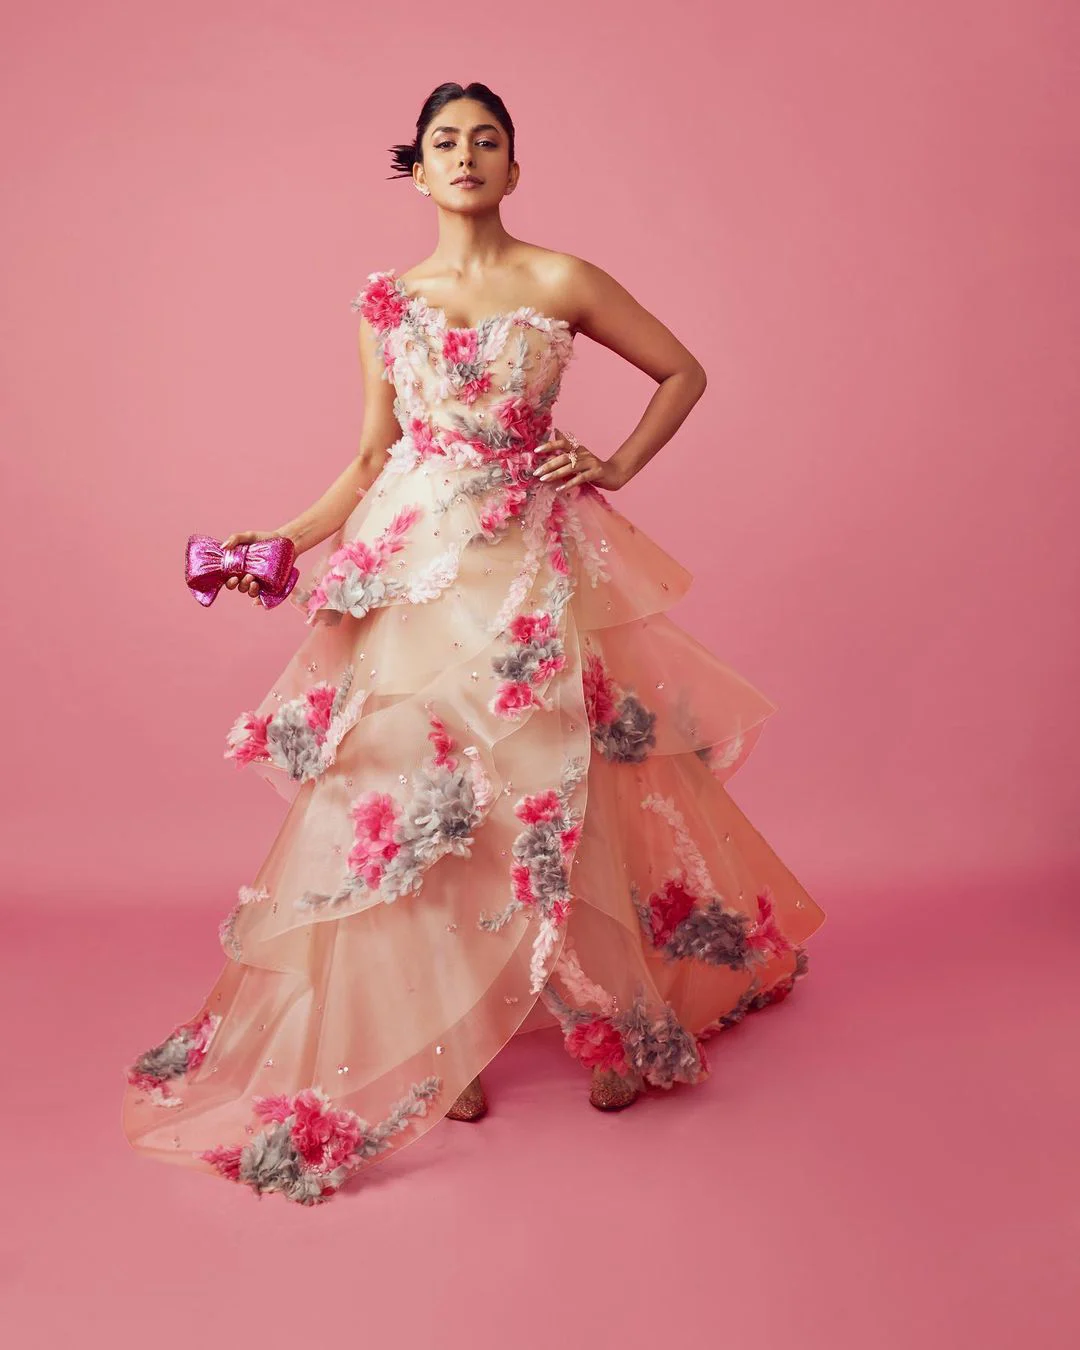 Mrunal Thakur Beauty in Pink Dress